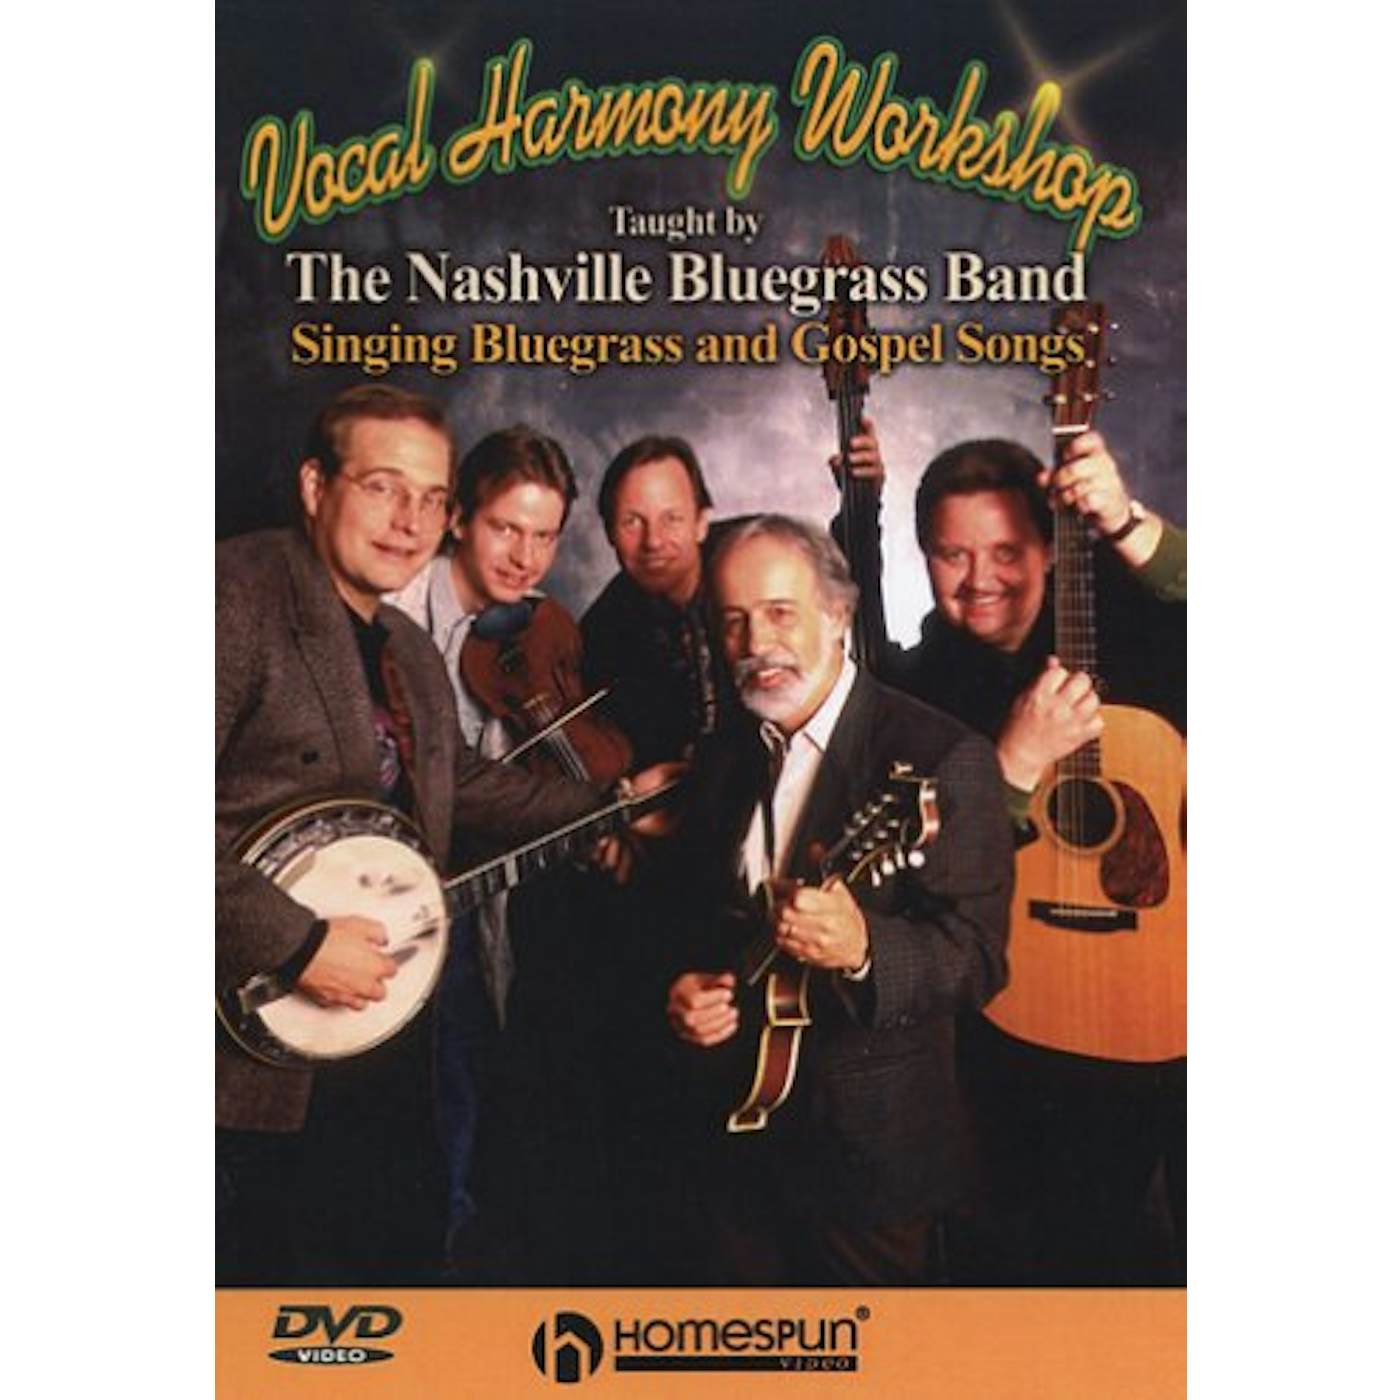 The Nashville Bluegrass Band VOCAL HARMONY WORKSHOP DVD